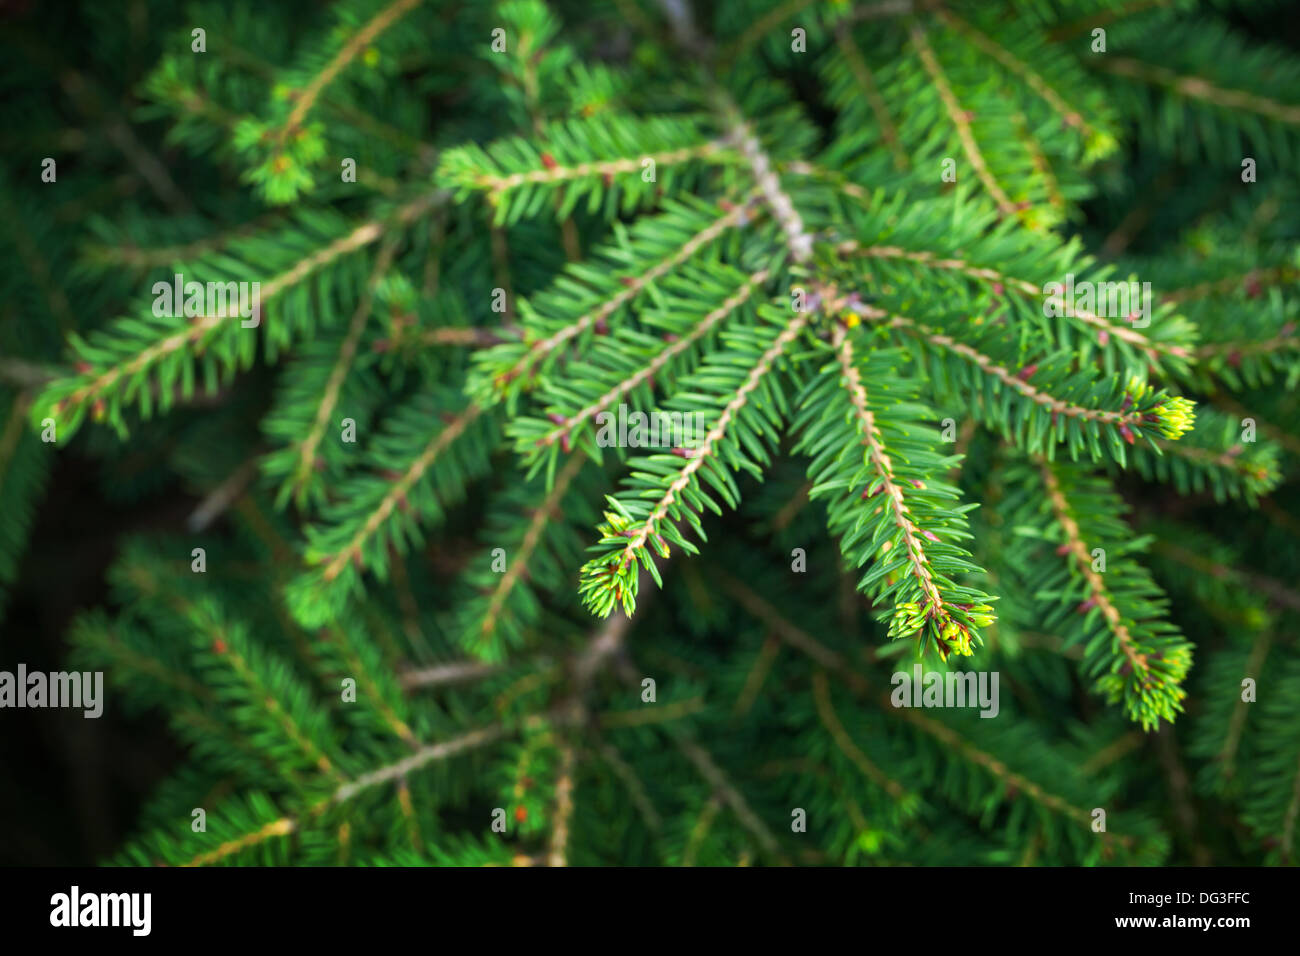 Bright green fir tree branches closeup photo Stock Photo